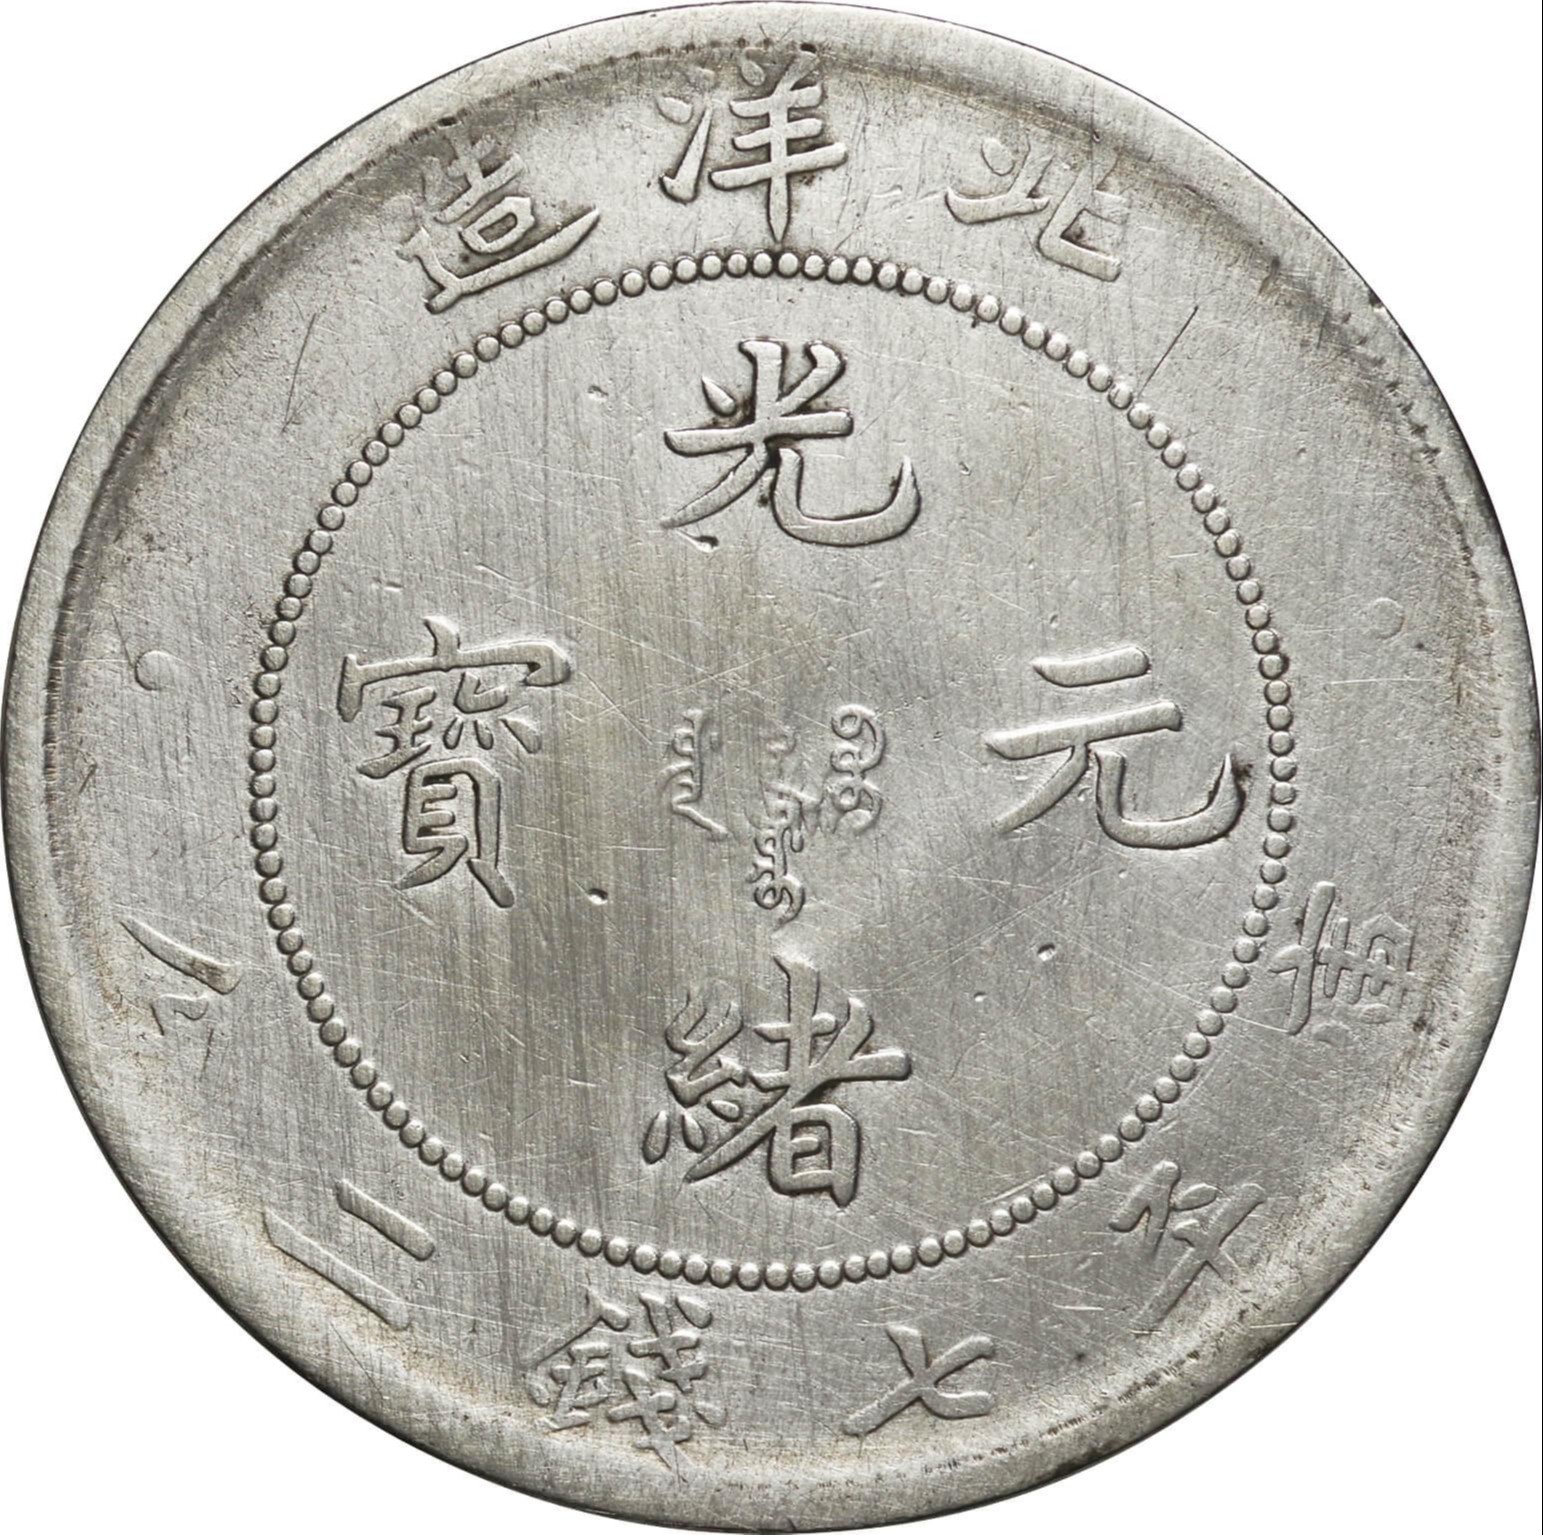 直隷省-Chihli. 1908. 普. F. Silver. (Dollar). 直隷省 北洋造 光緒 ...